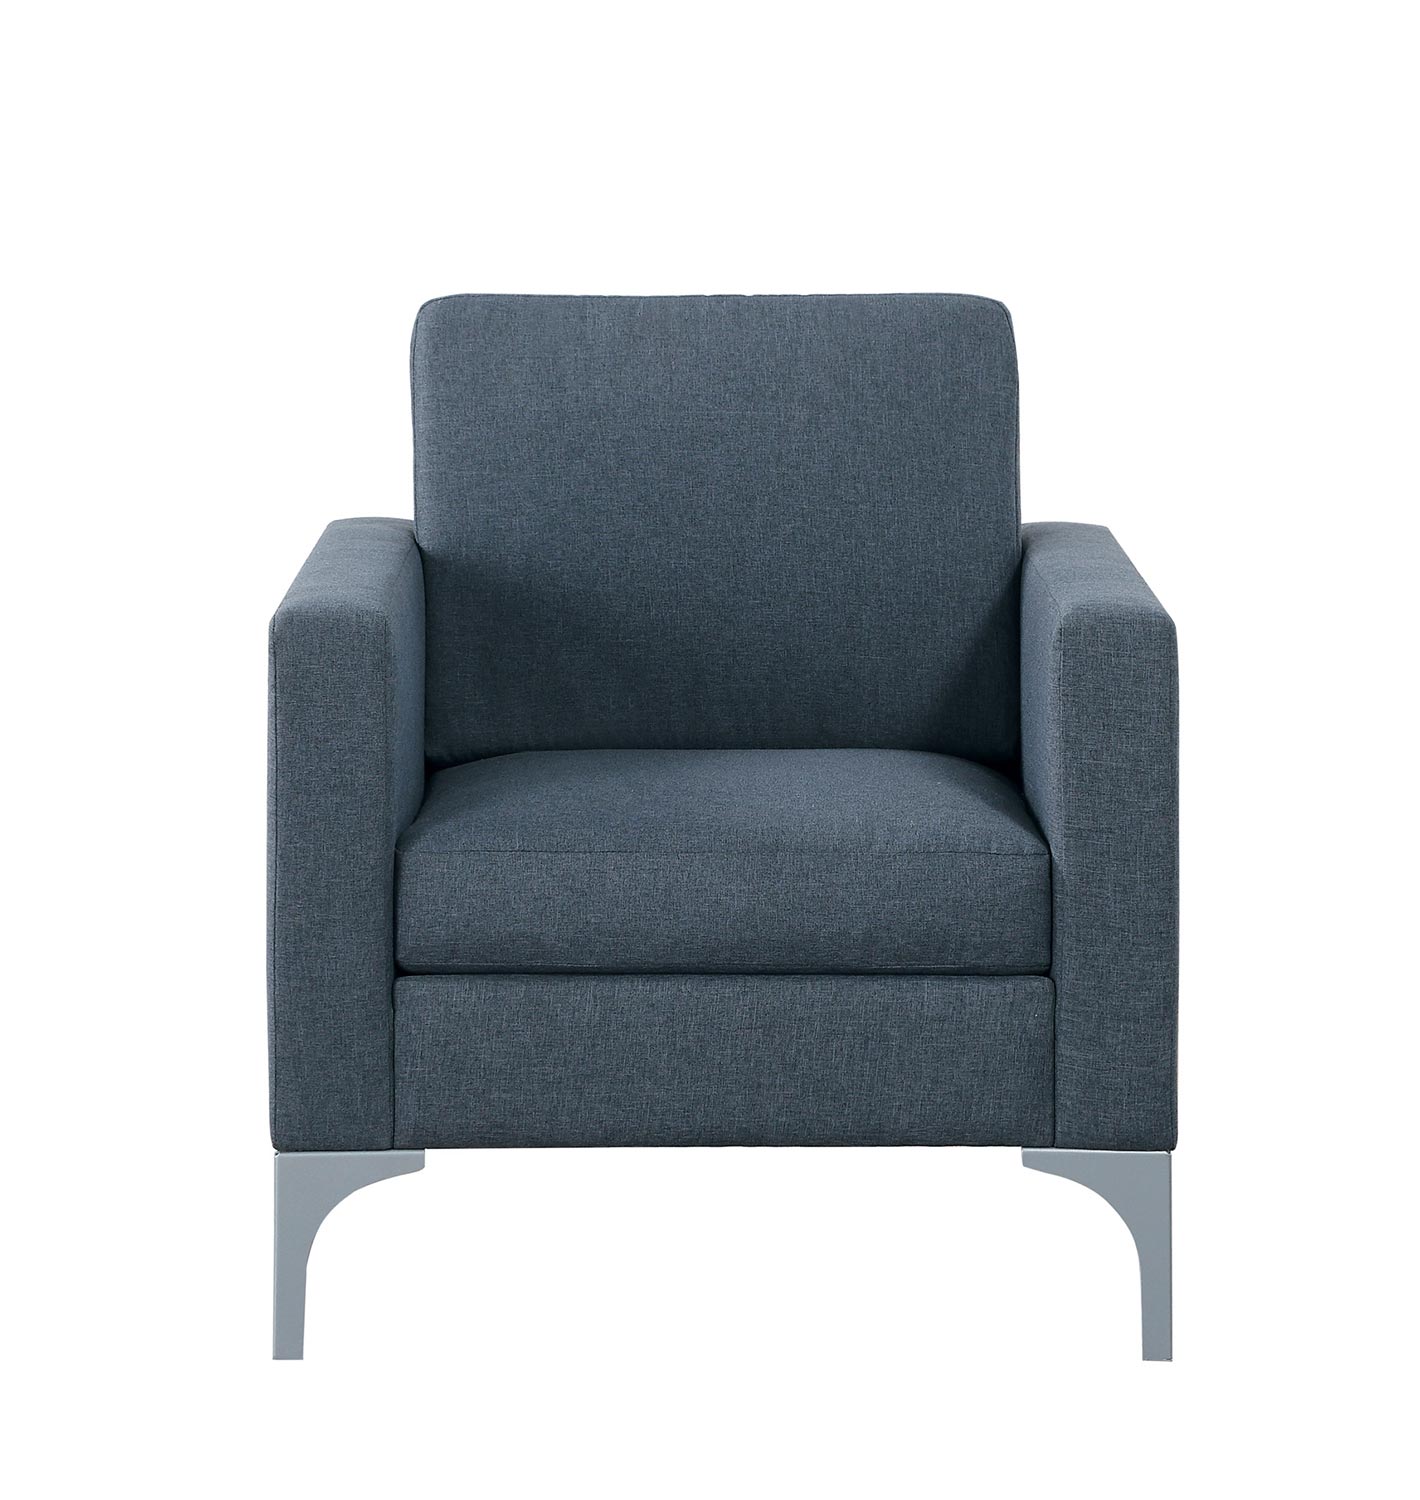 Homelegance Soho Chair - Dark Gray - Brownish Gray